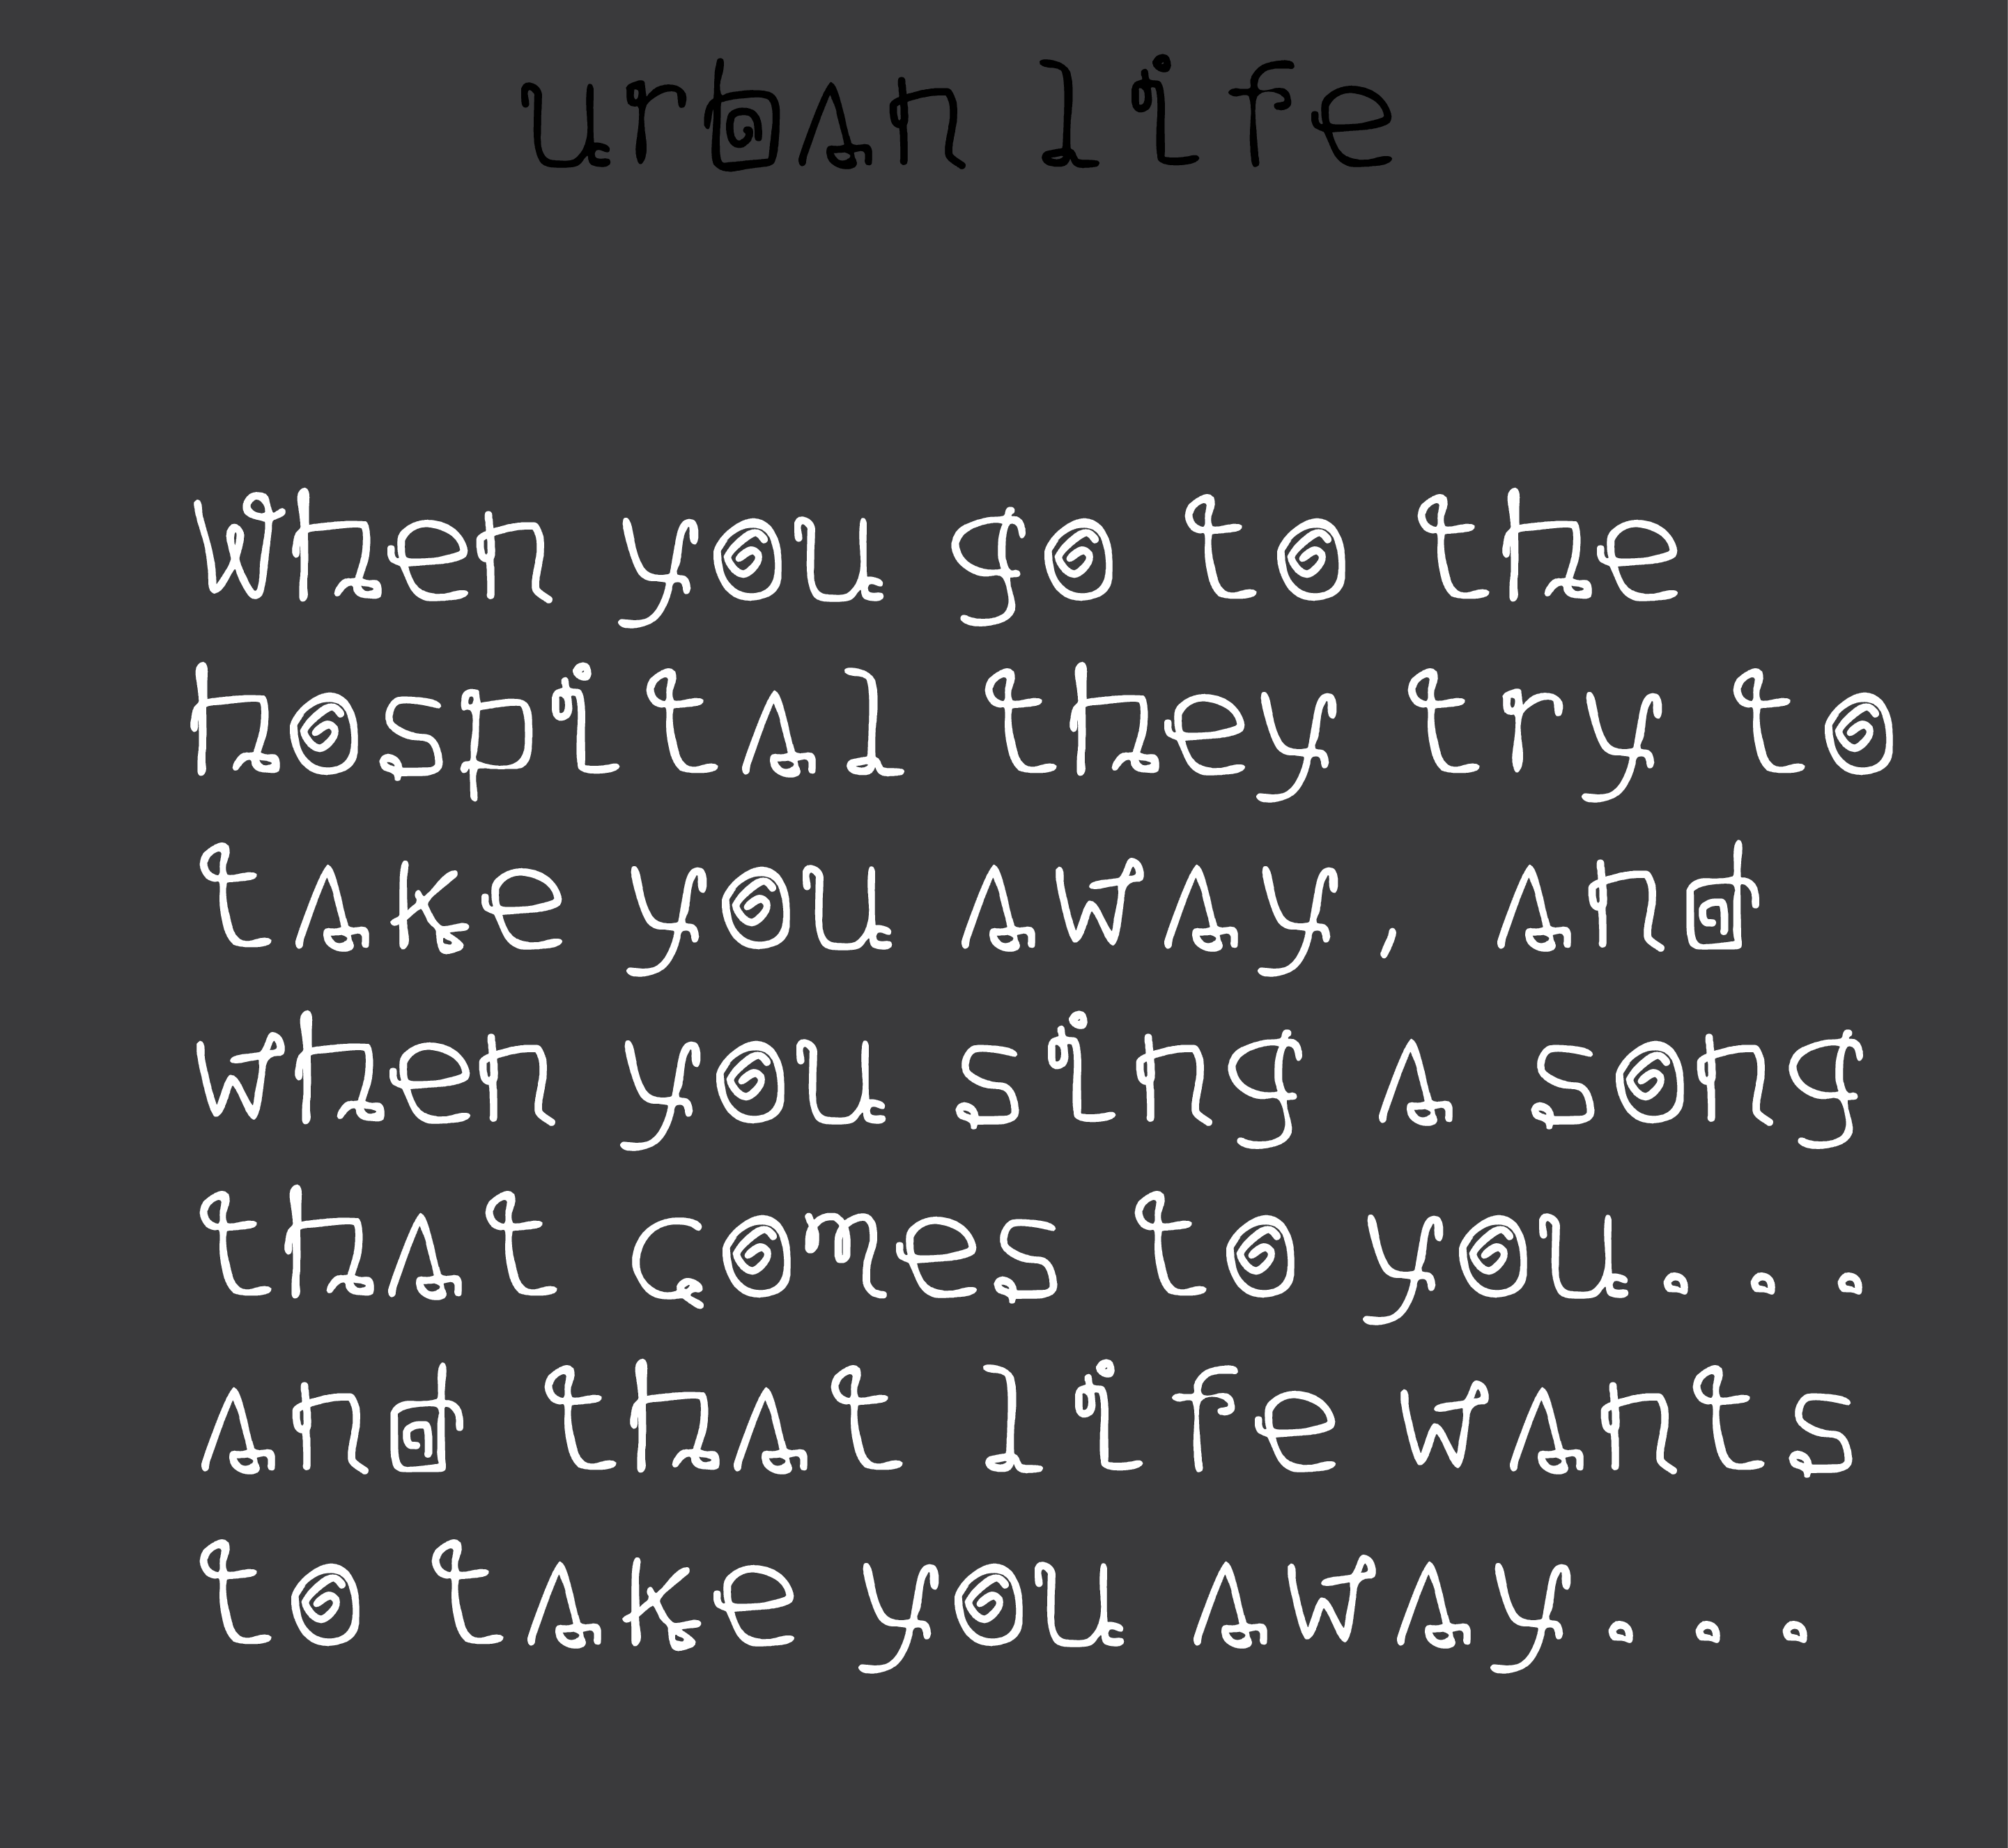 urban life